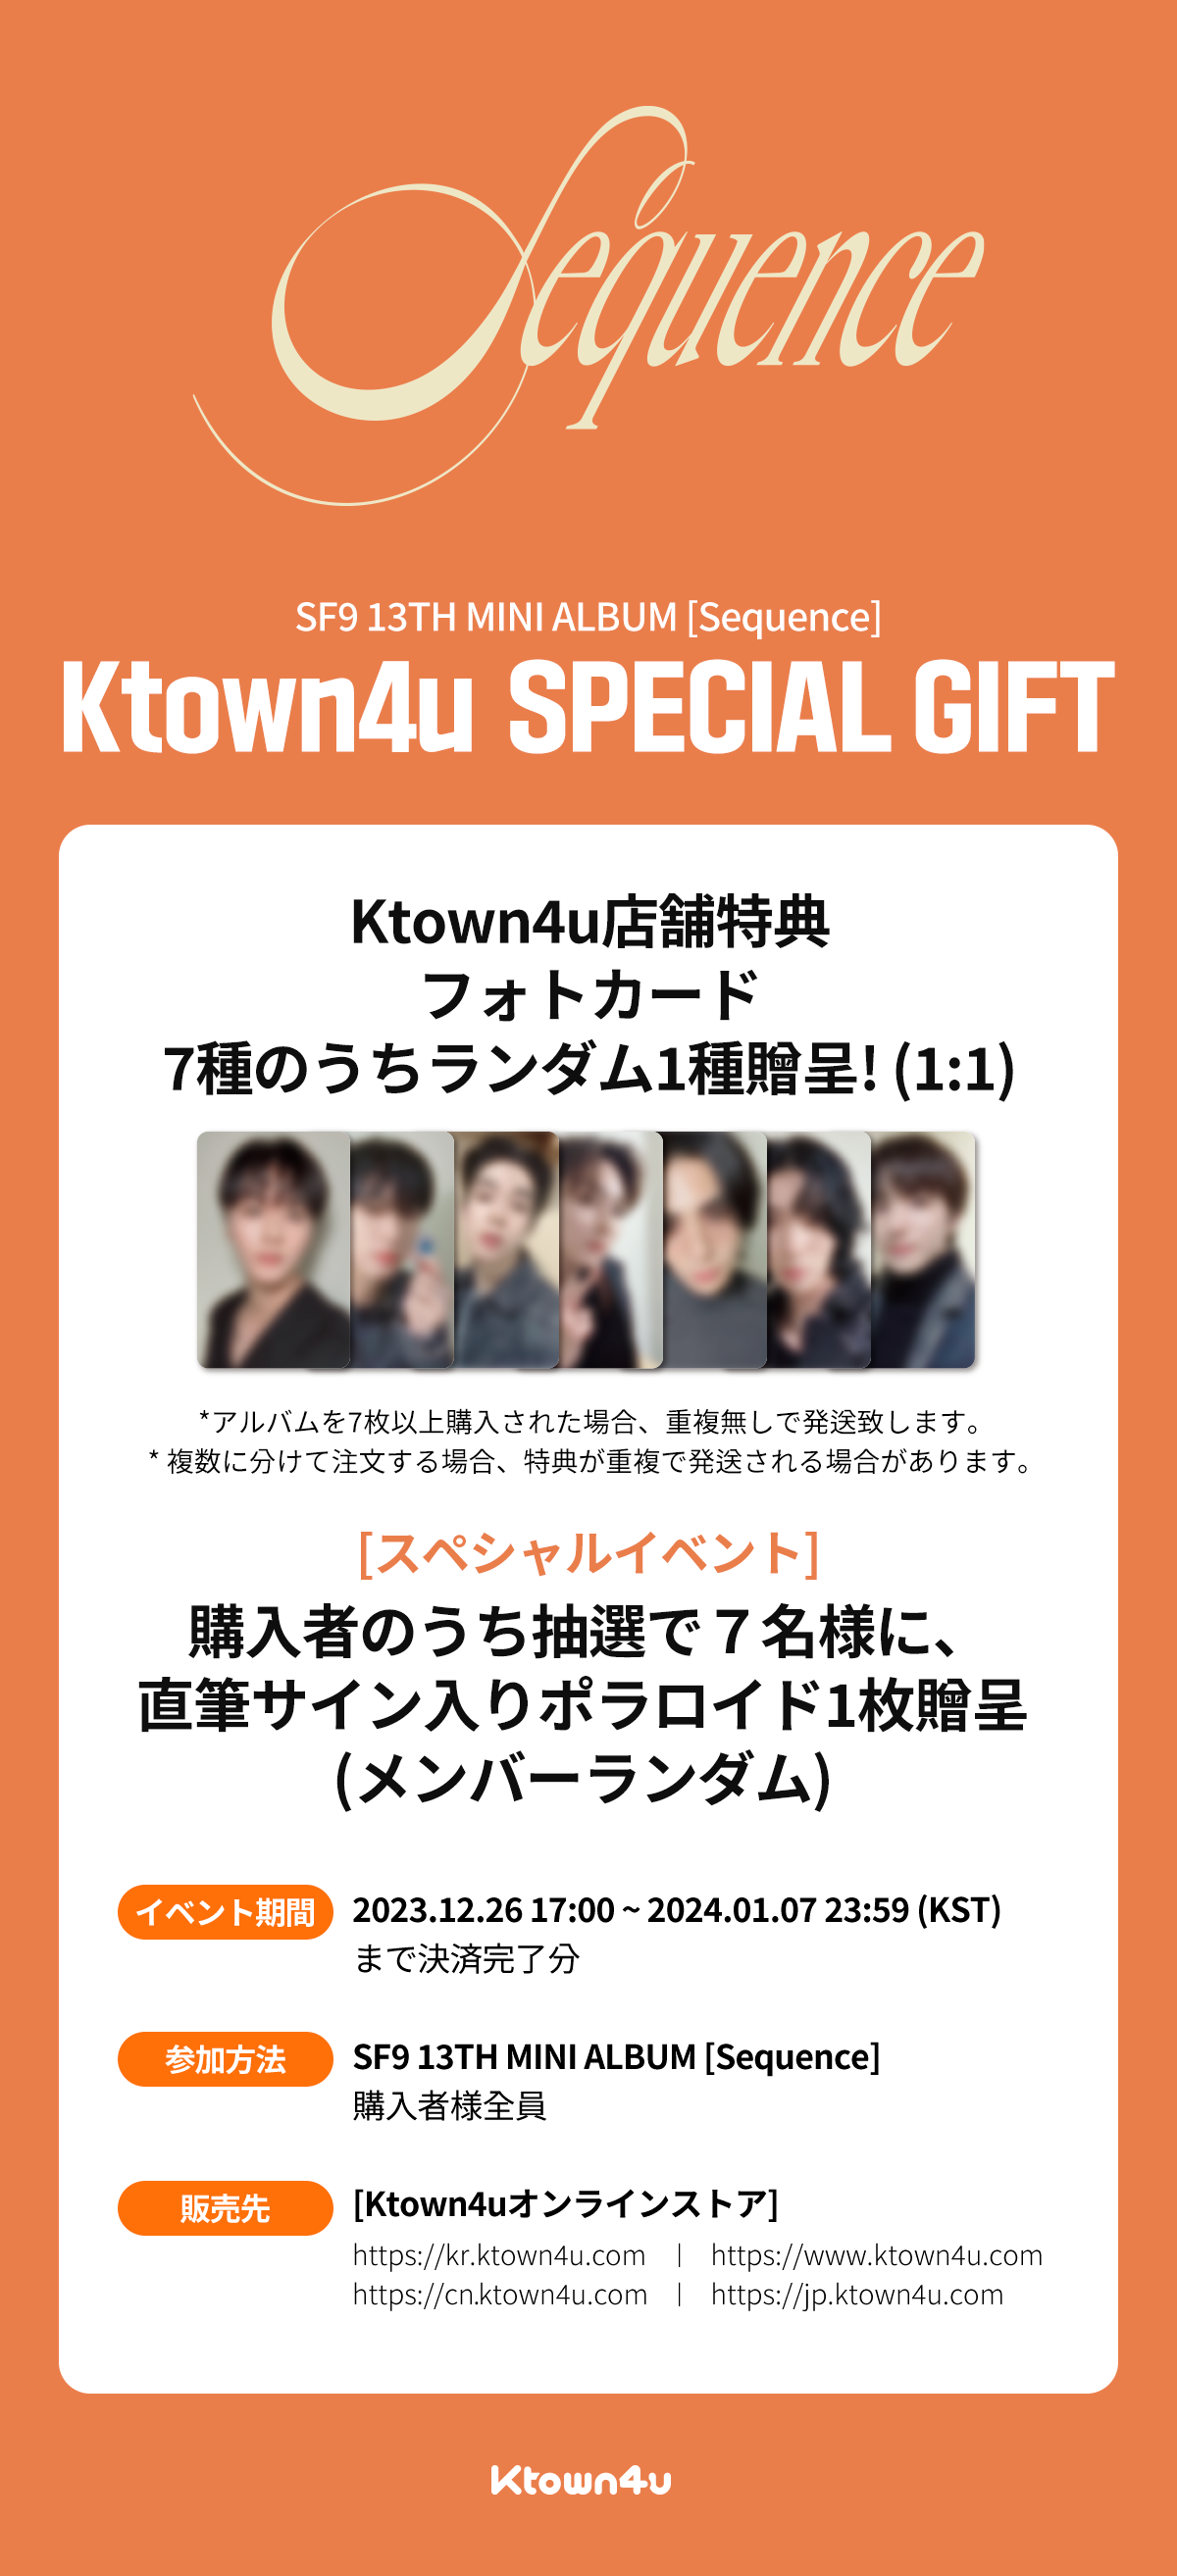 jp.ktown4u.com : event detail_SF9